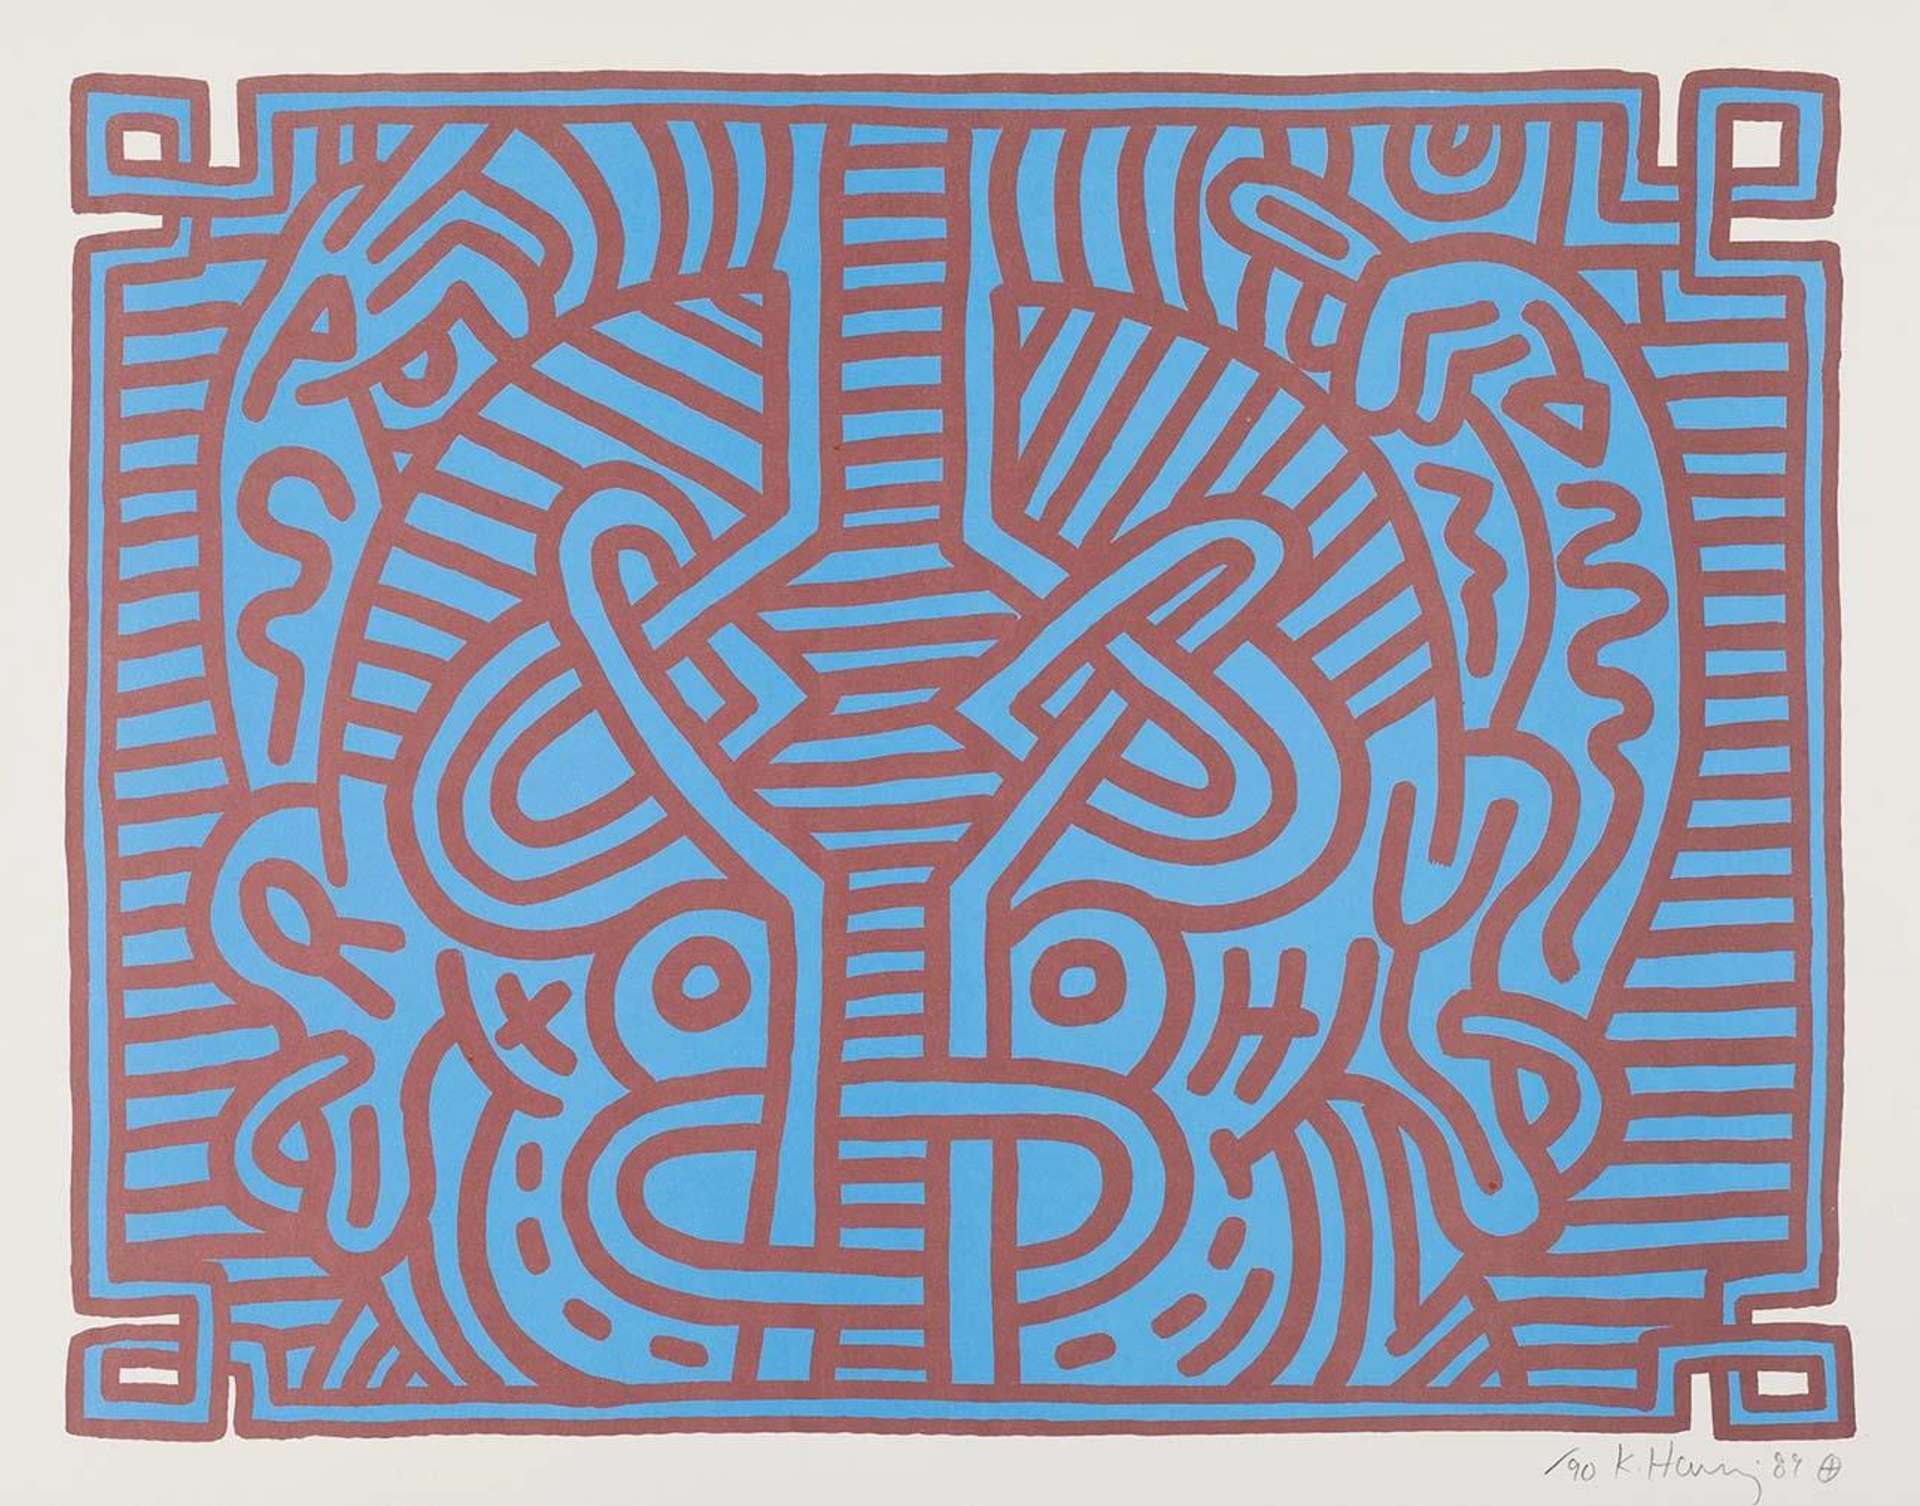 Chocolate Buddha 1 by Keith Haring